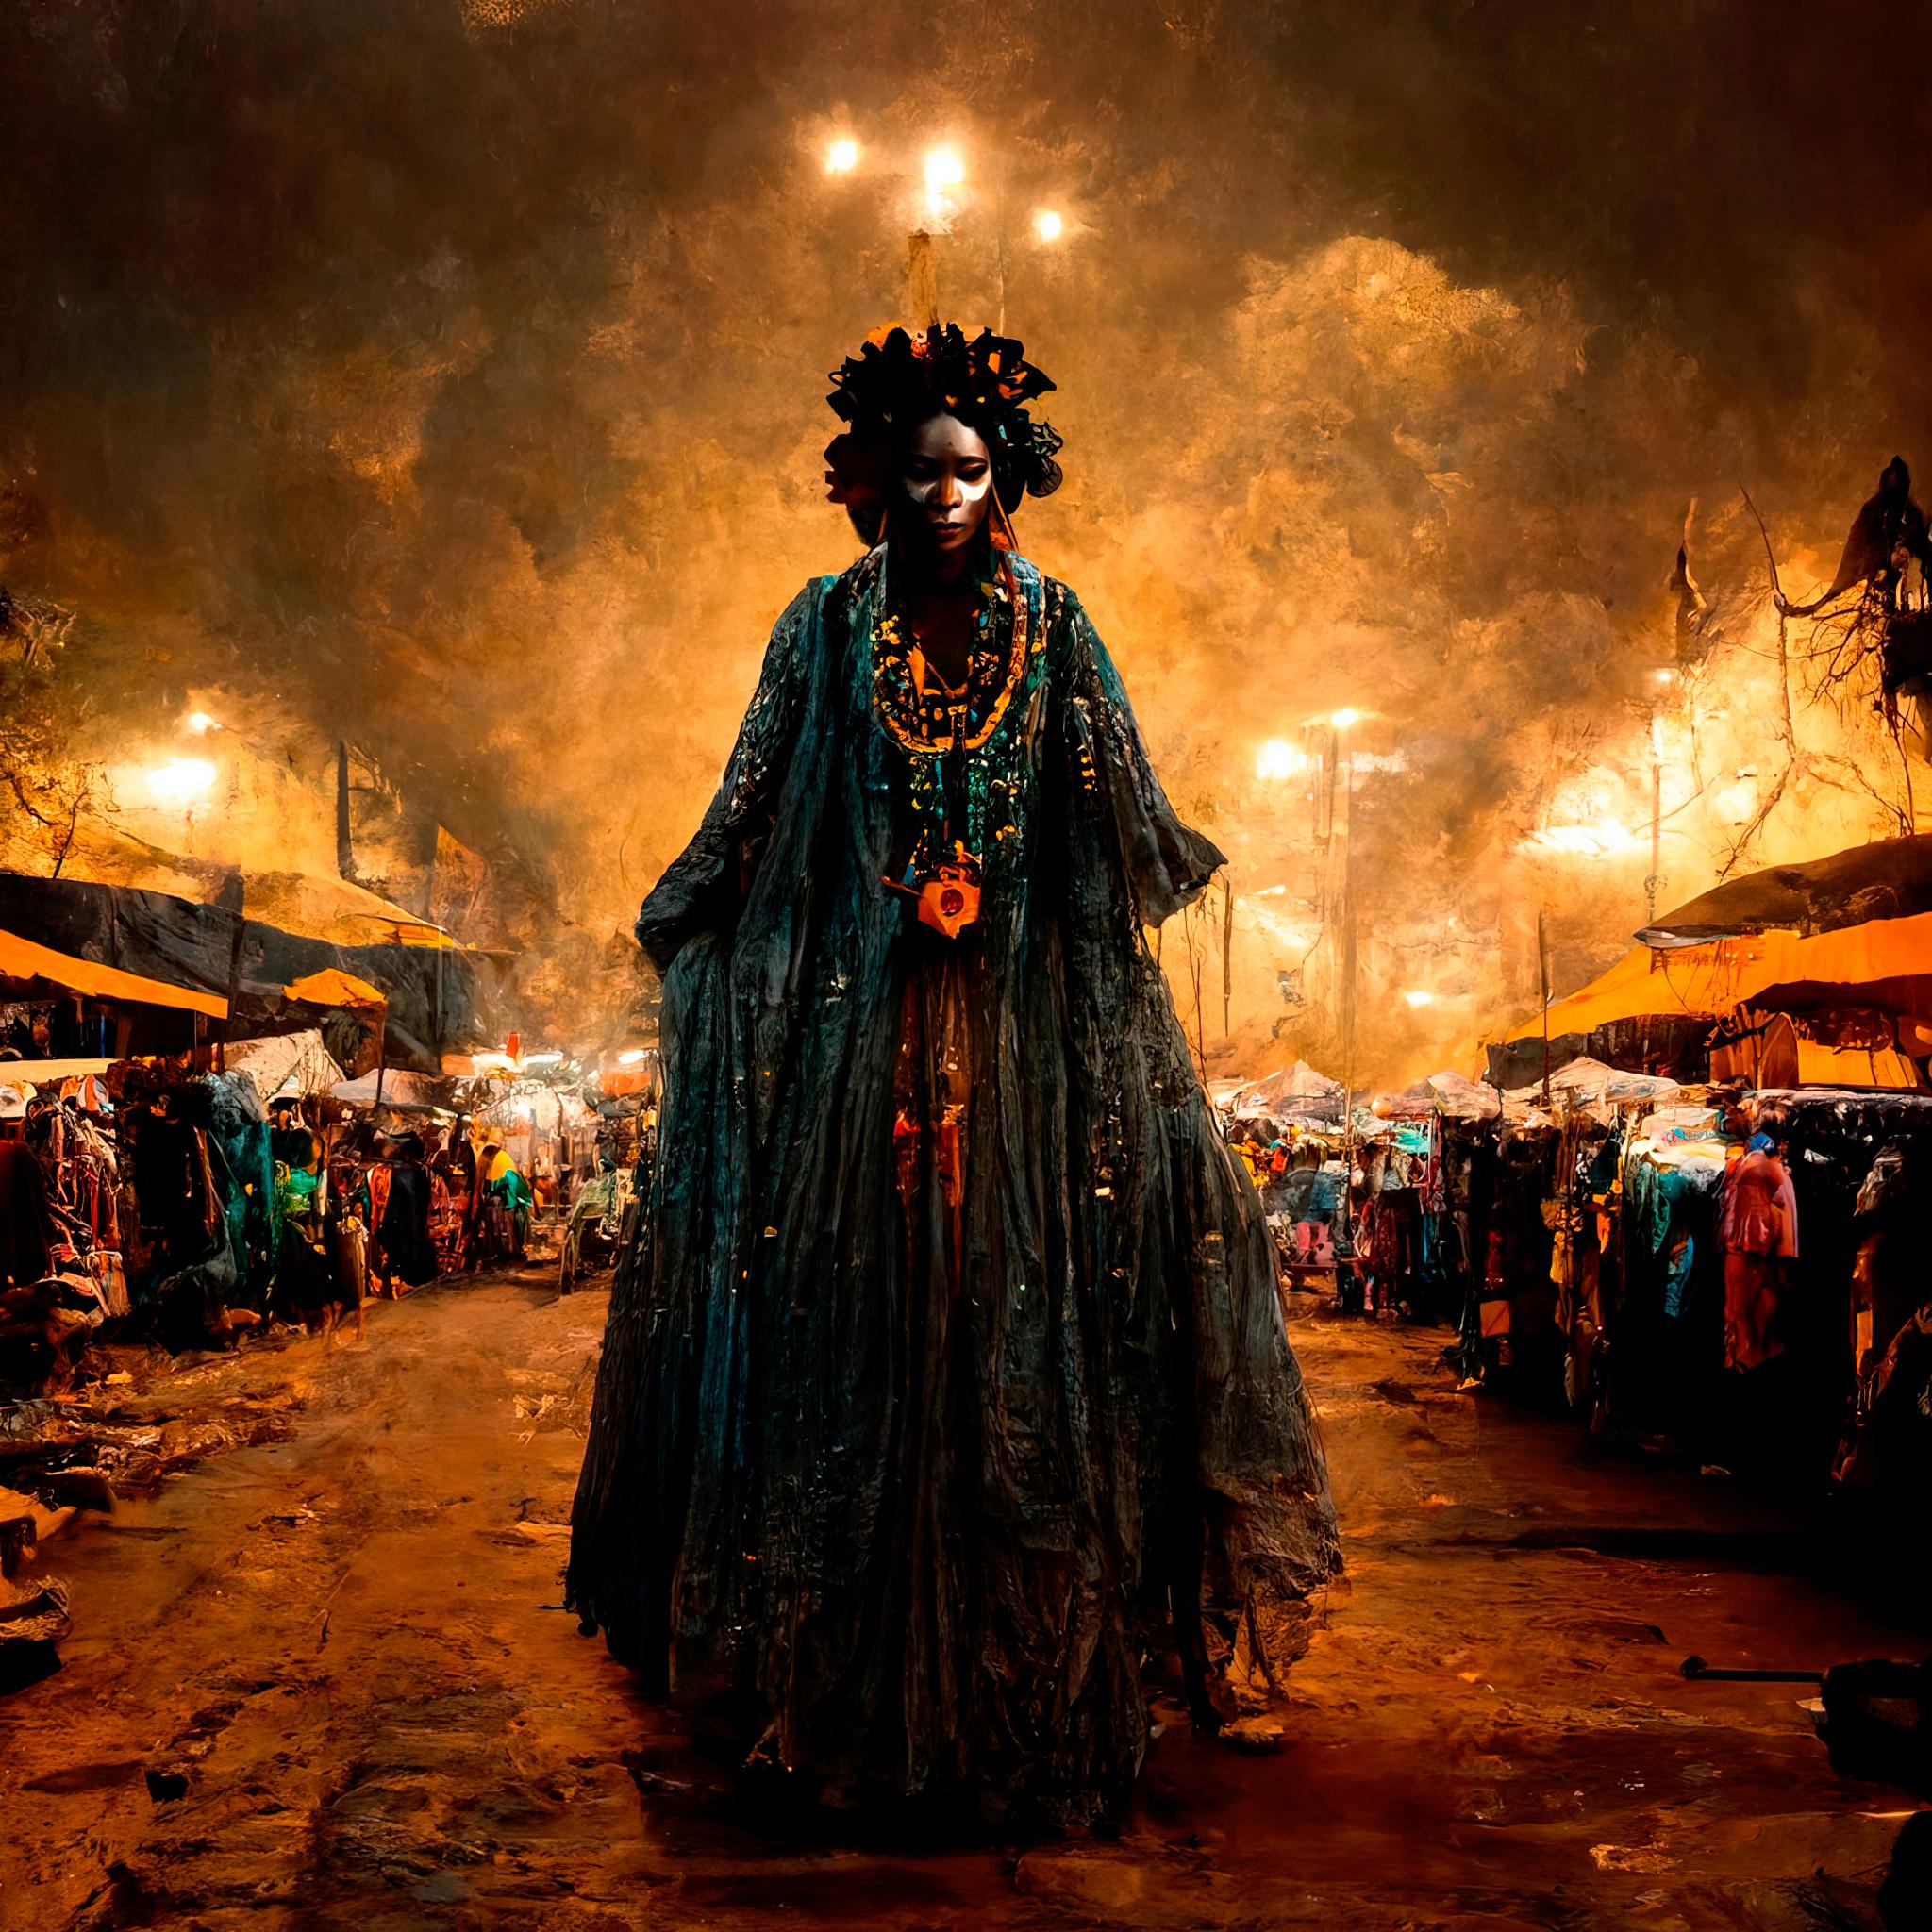 Artist Àsìkò explores Yoruba culture through mythology - CNN Style